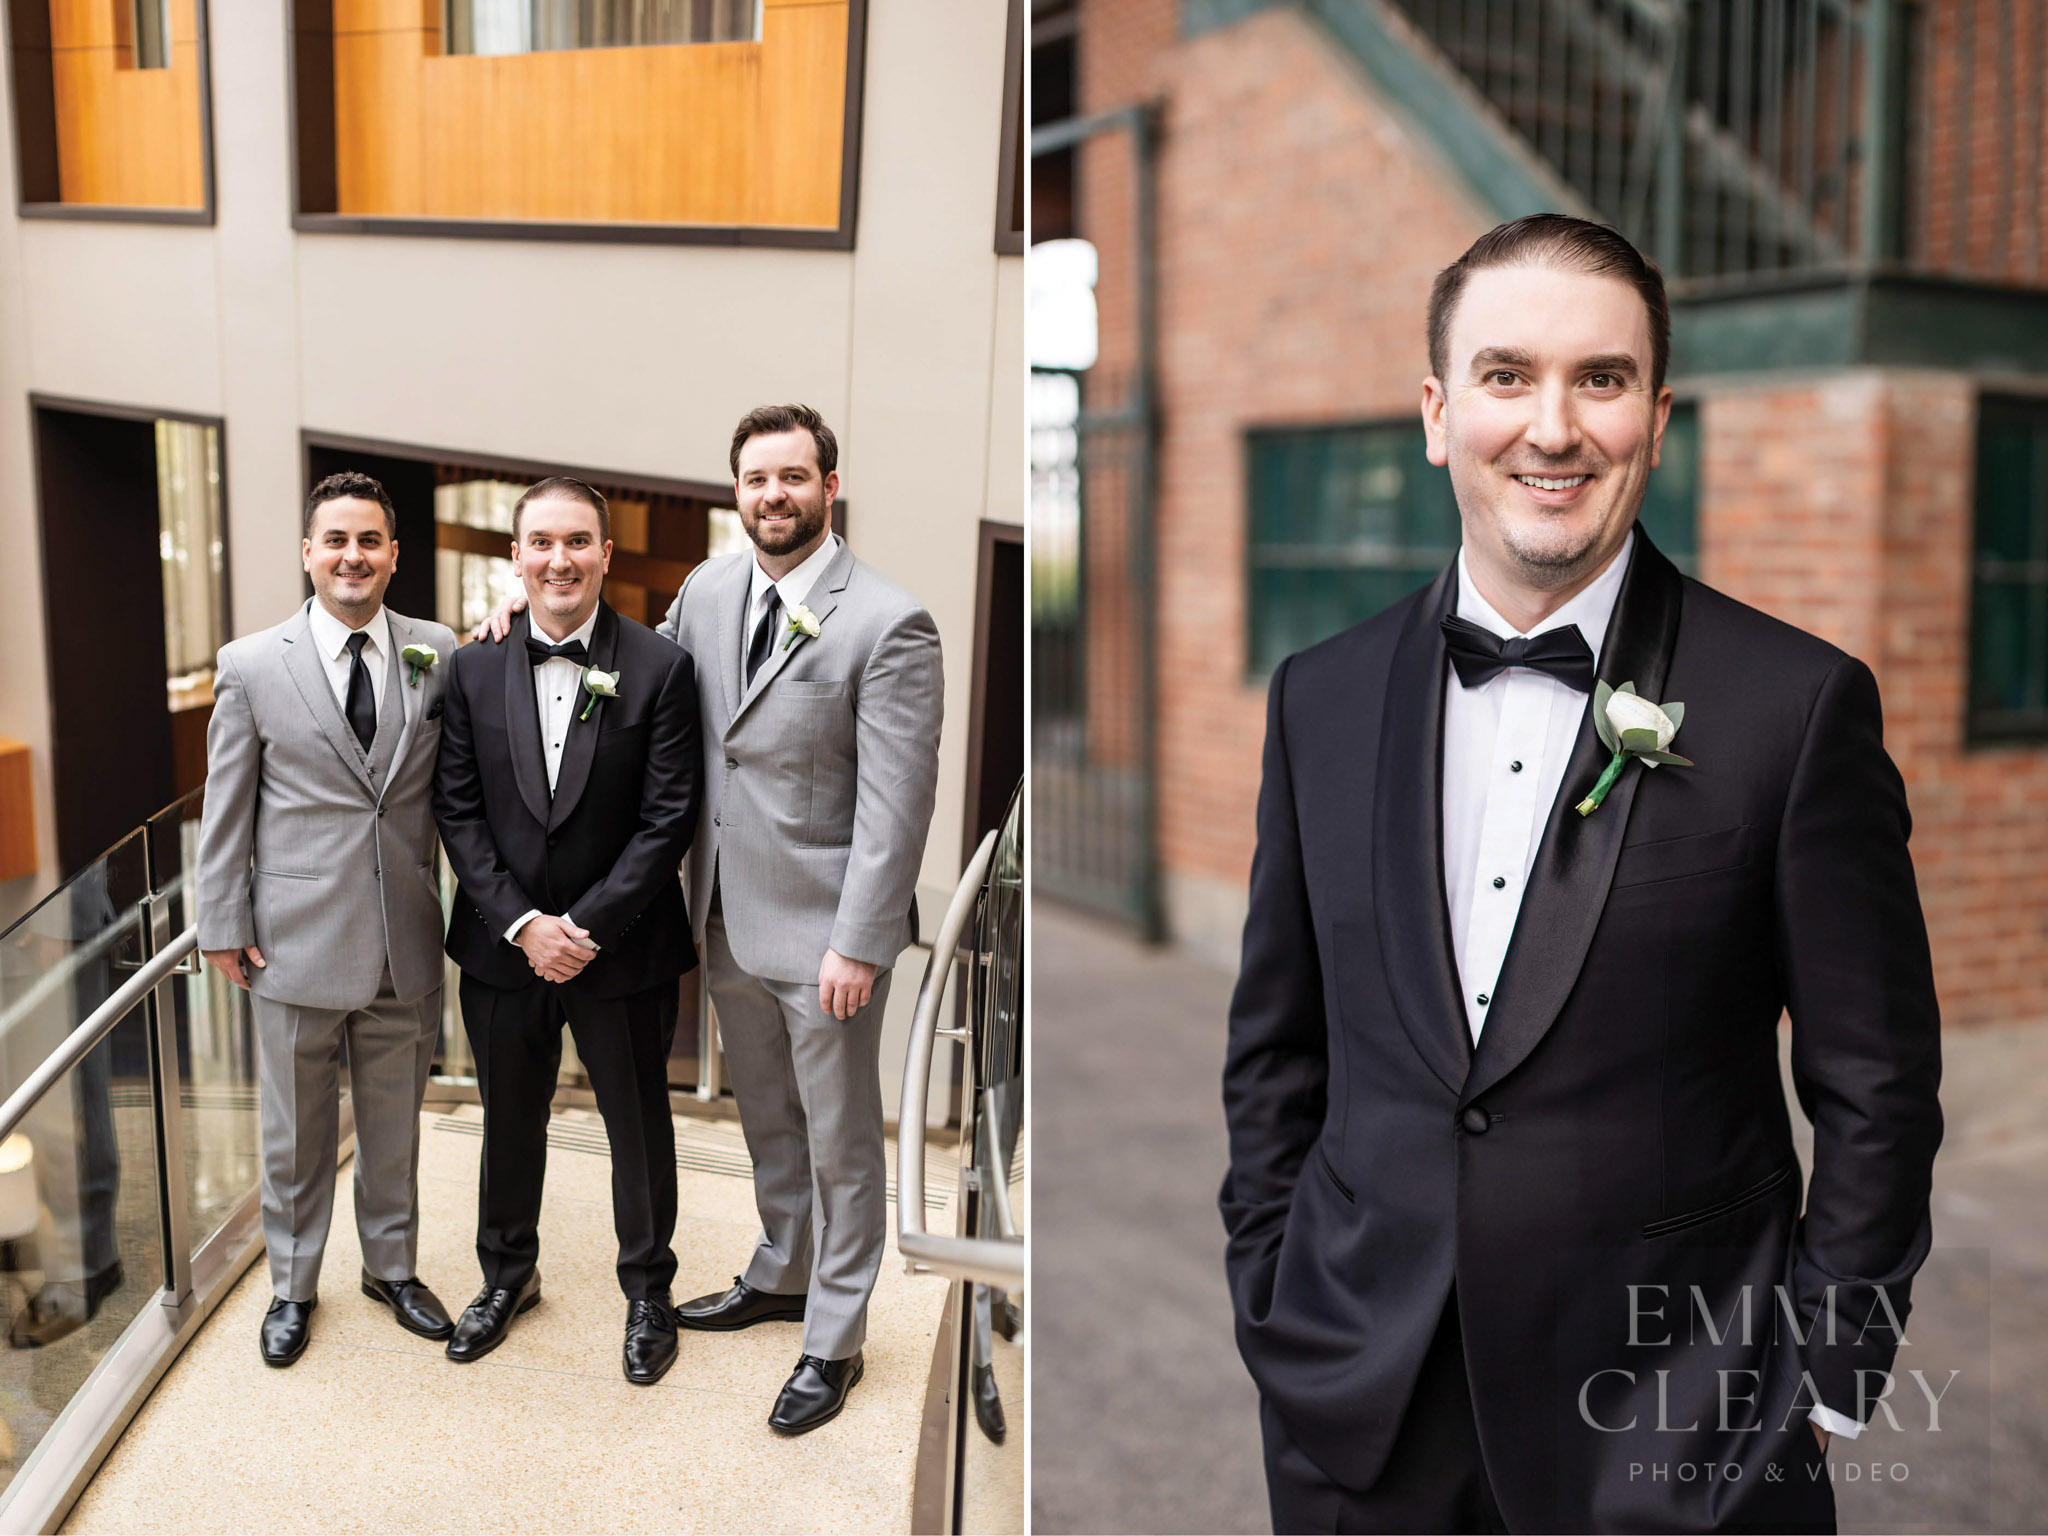 Portrait of the groom and groomsmen